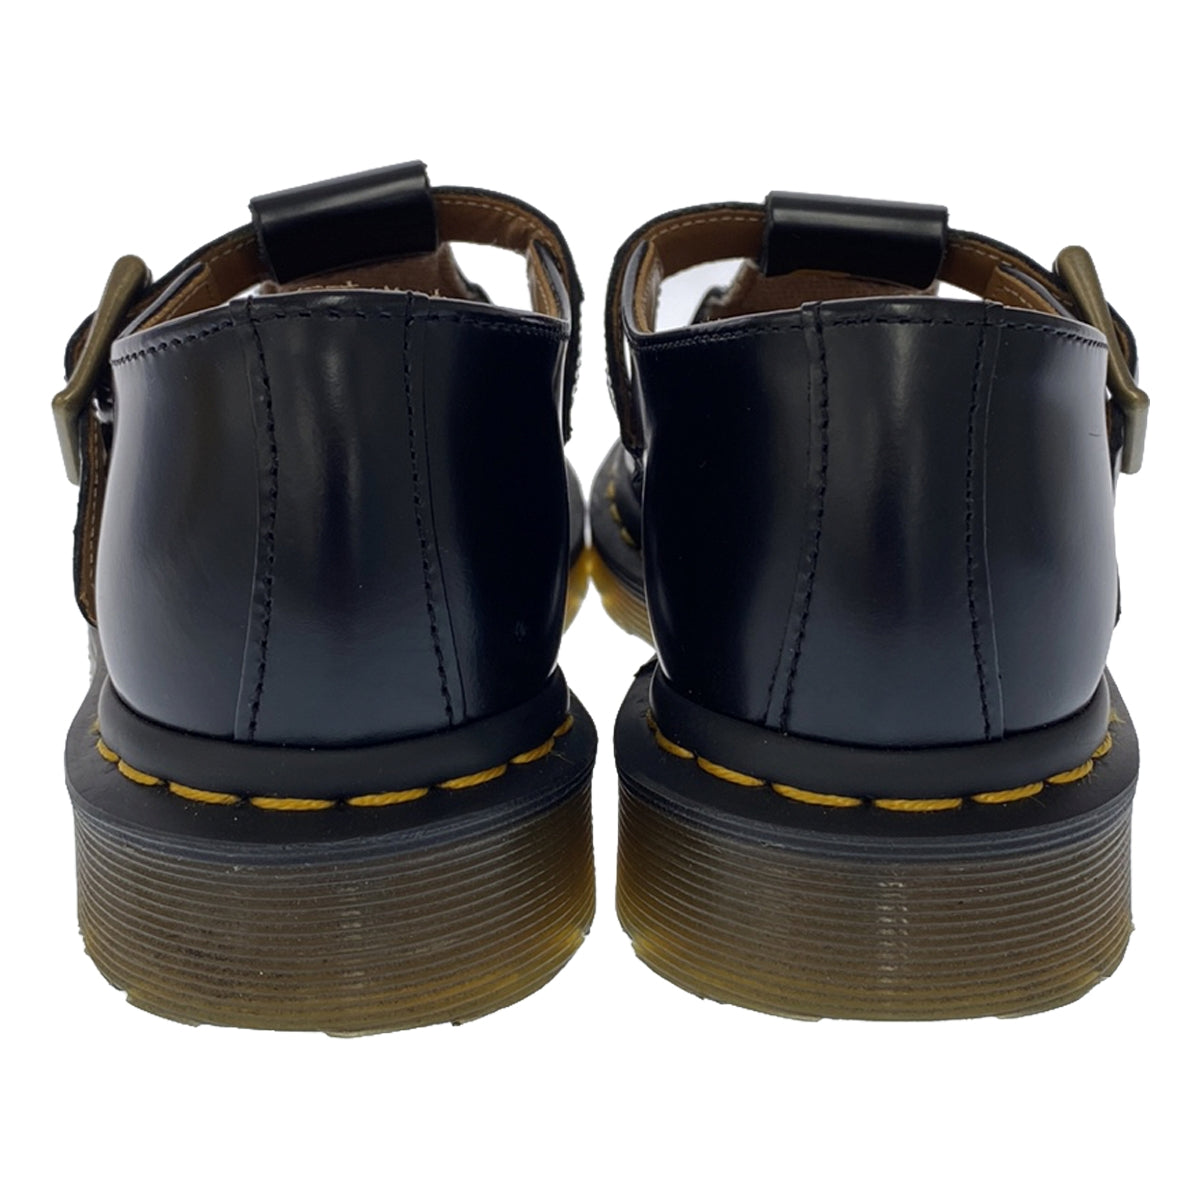 Dr.Martens / ドクターマーチン | POLLEY / ポリー Tストラップ レザーシューズ 革靴 | UK3 | レディース